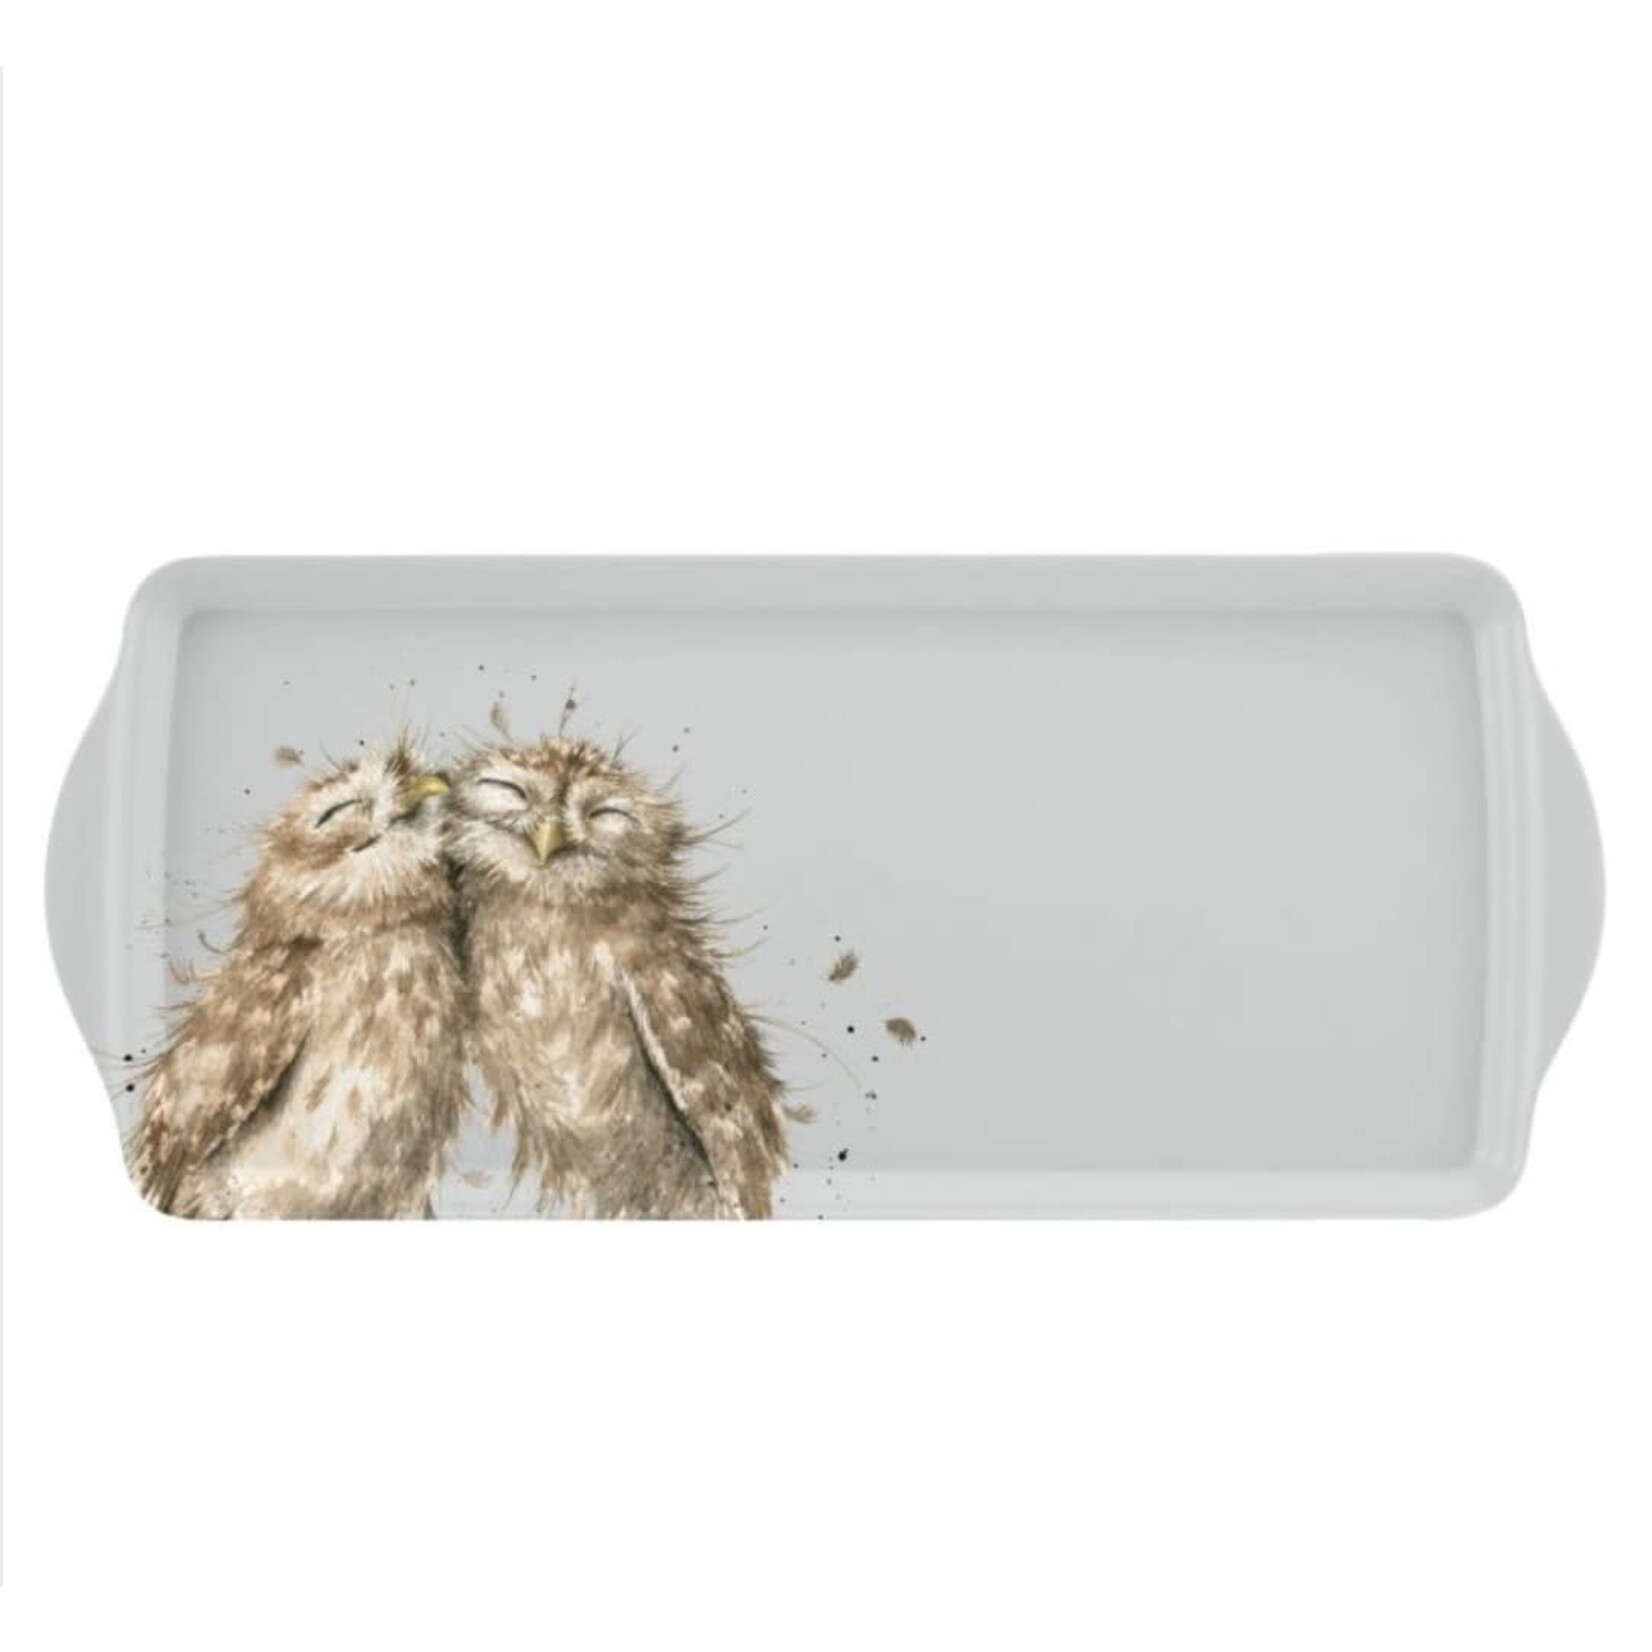 PIMPERNEL WRENDALE Owl Sandwich Tray 15x6.5"